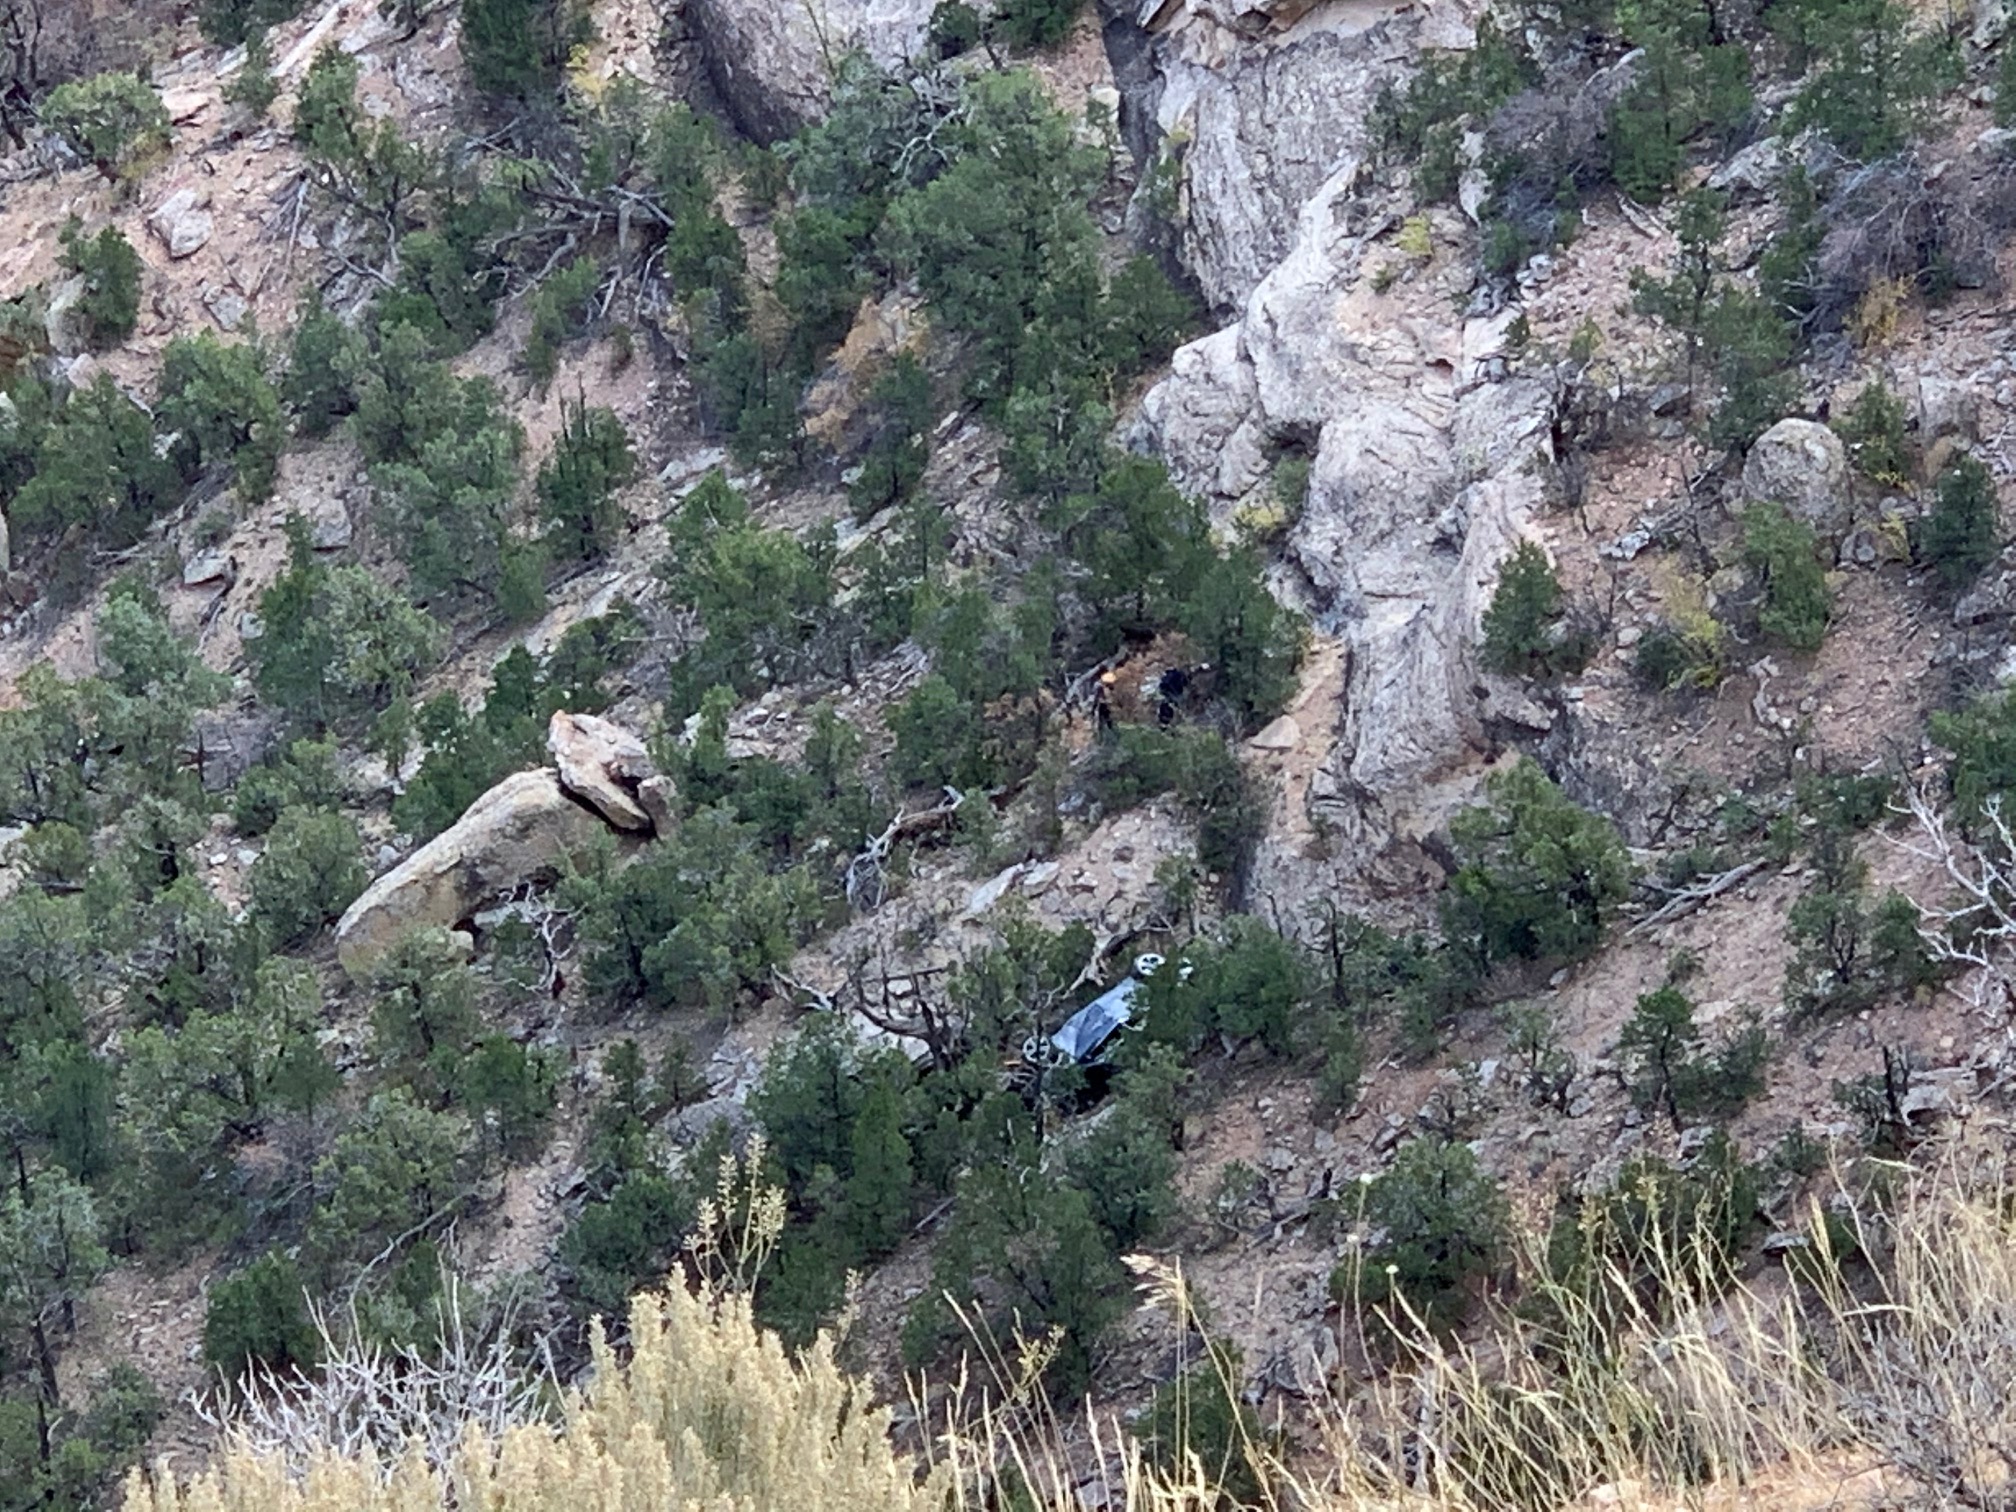 Mangled vehicle laying on side at bottom of canyon.